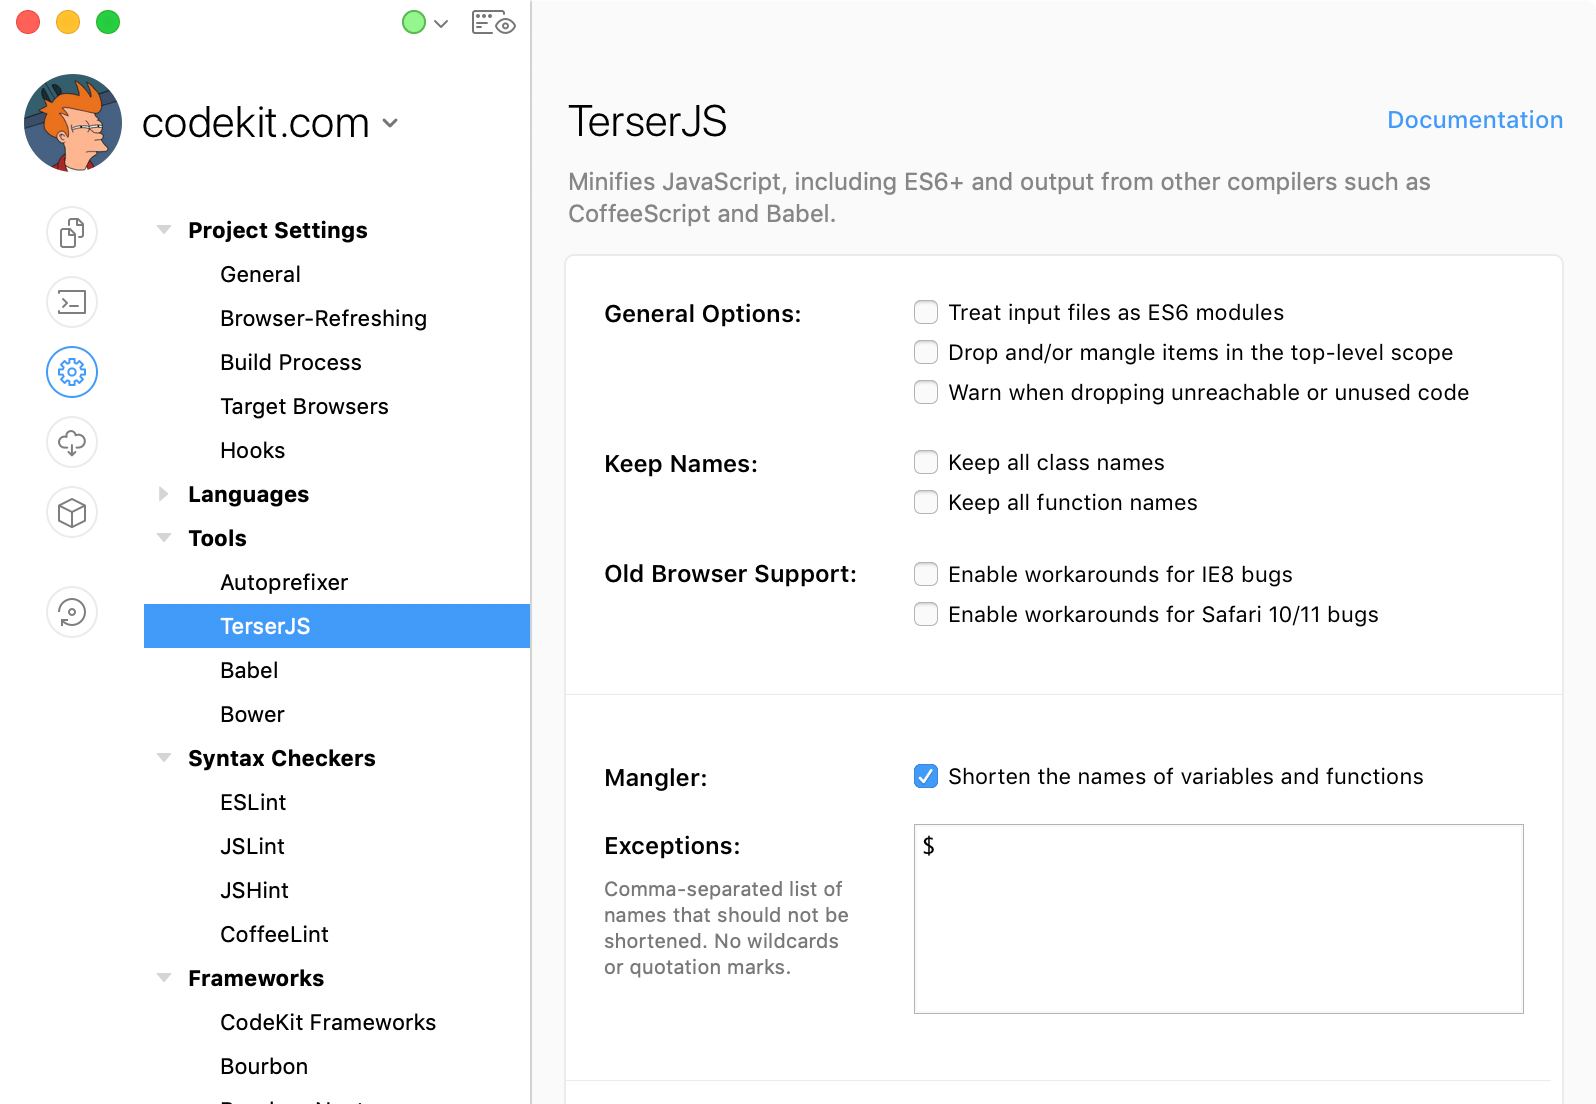 a screenshot of the TerserJS settings in the CodeKit Window